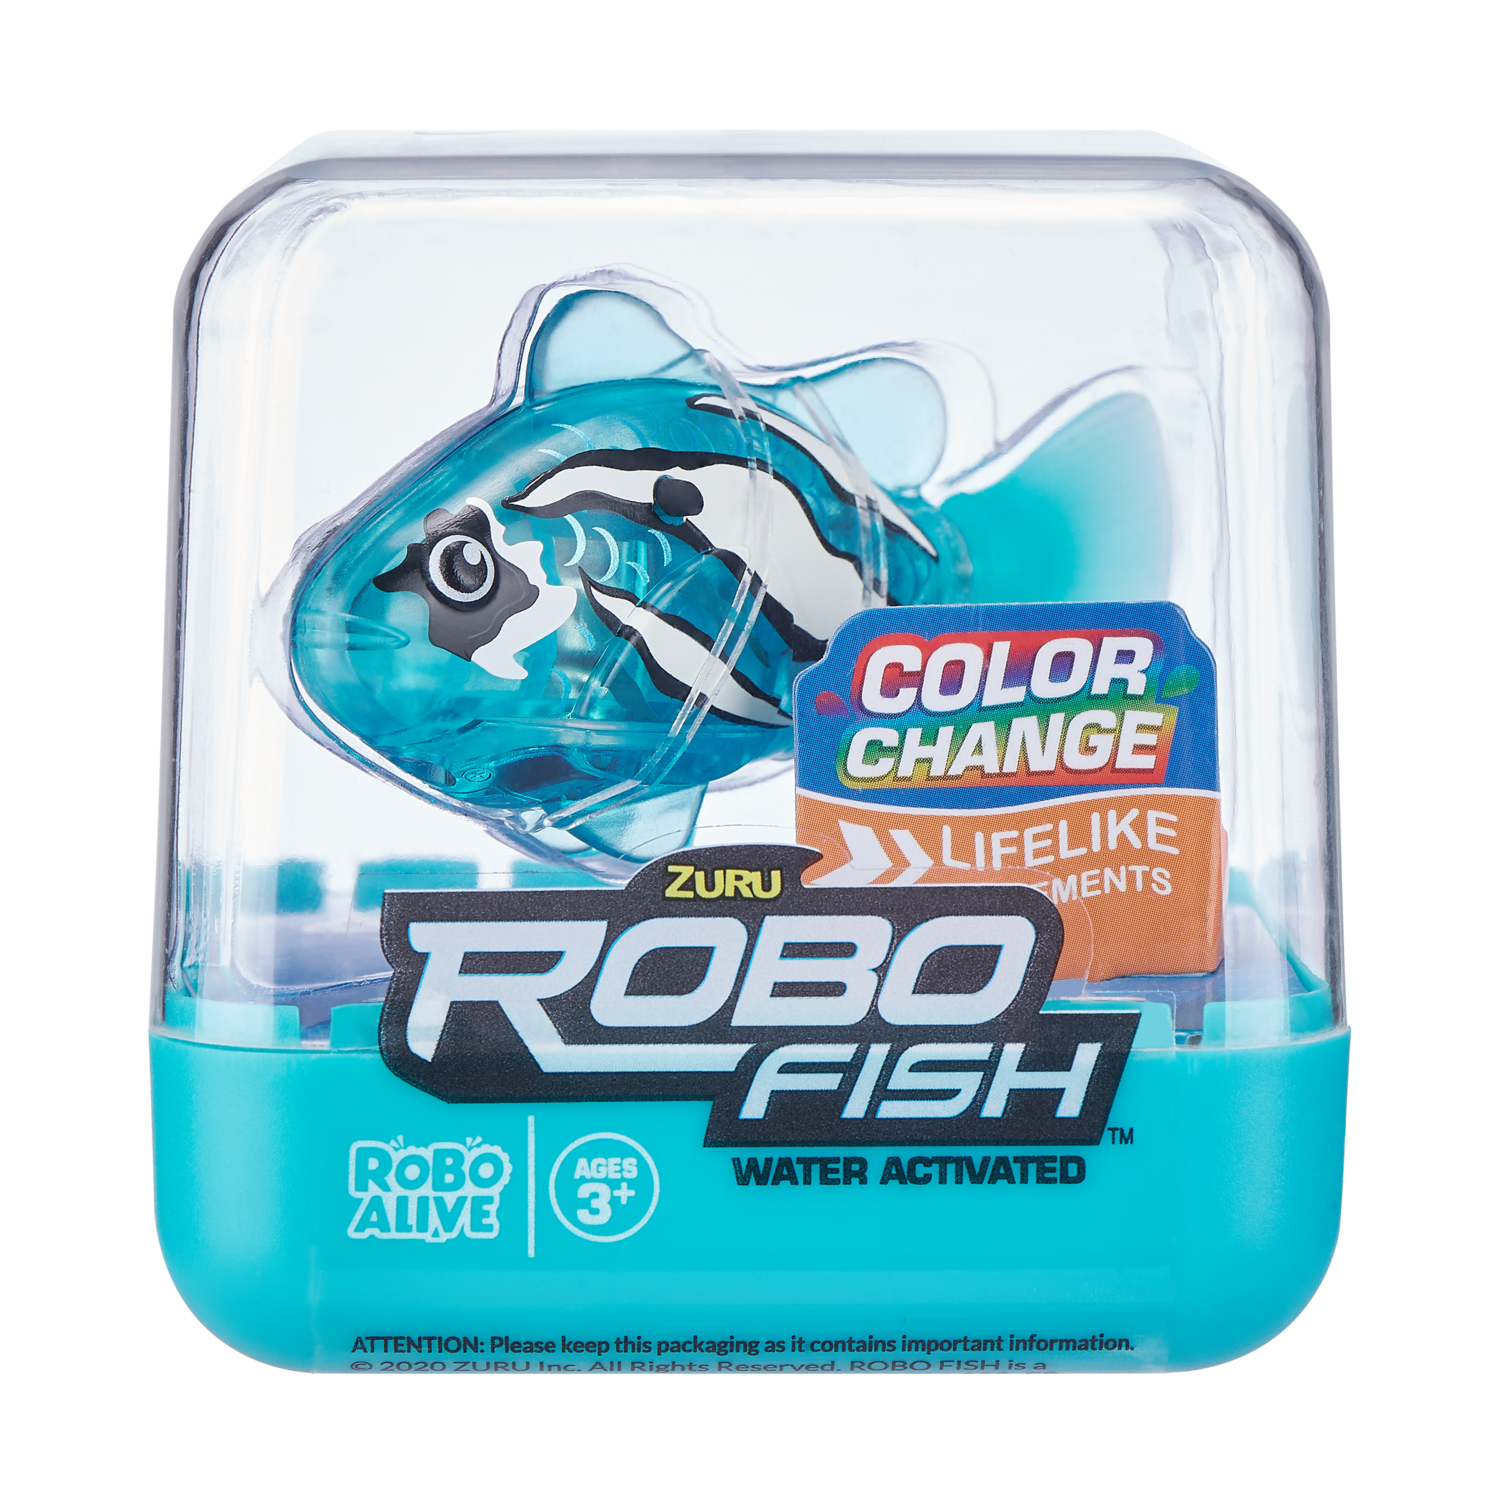 Robo Alive - Fish - Turquoise